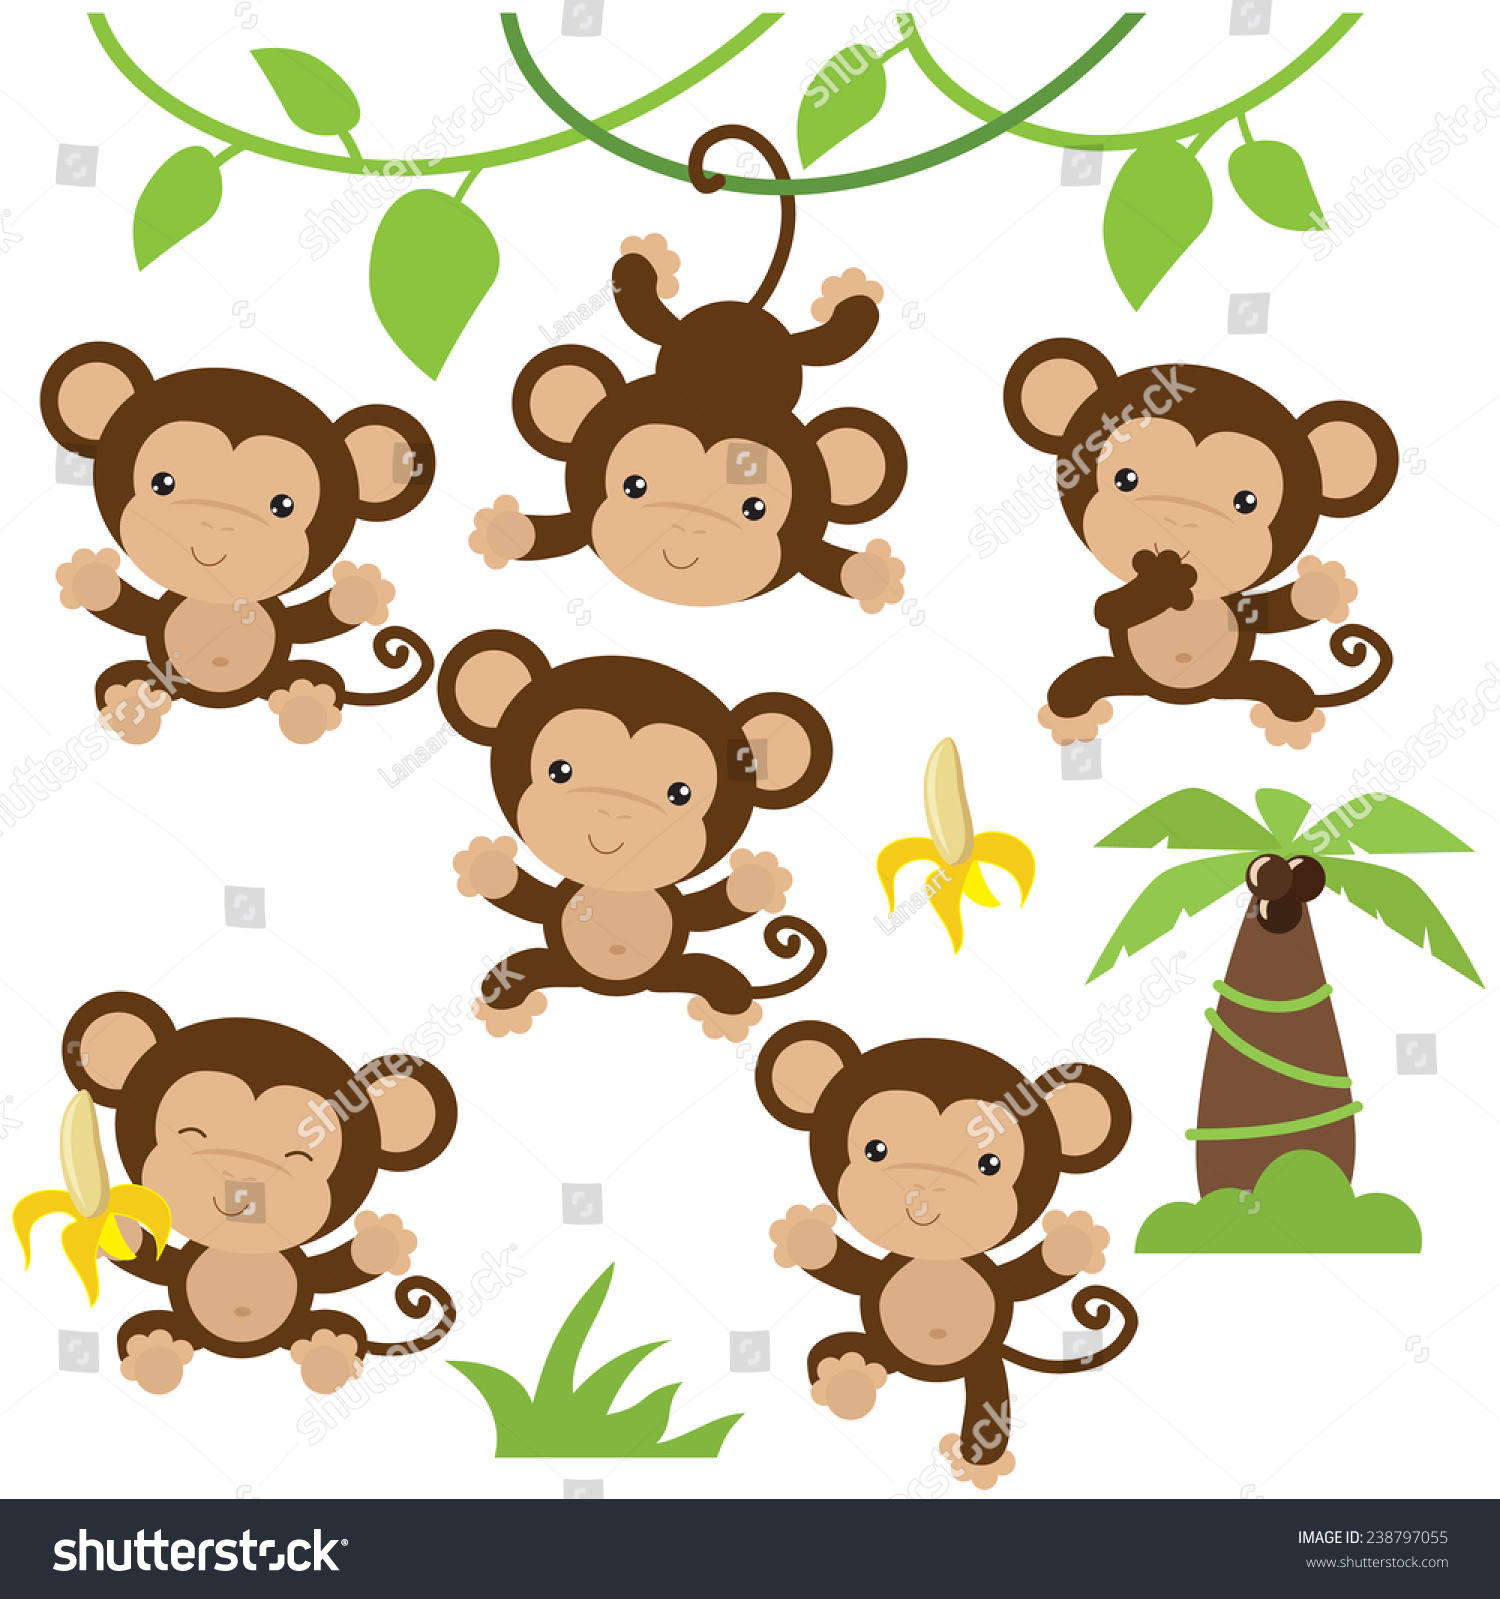 monkey illustrations clipart - photo #35